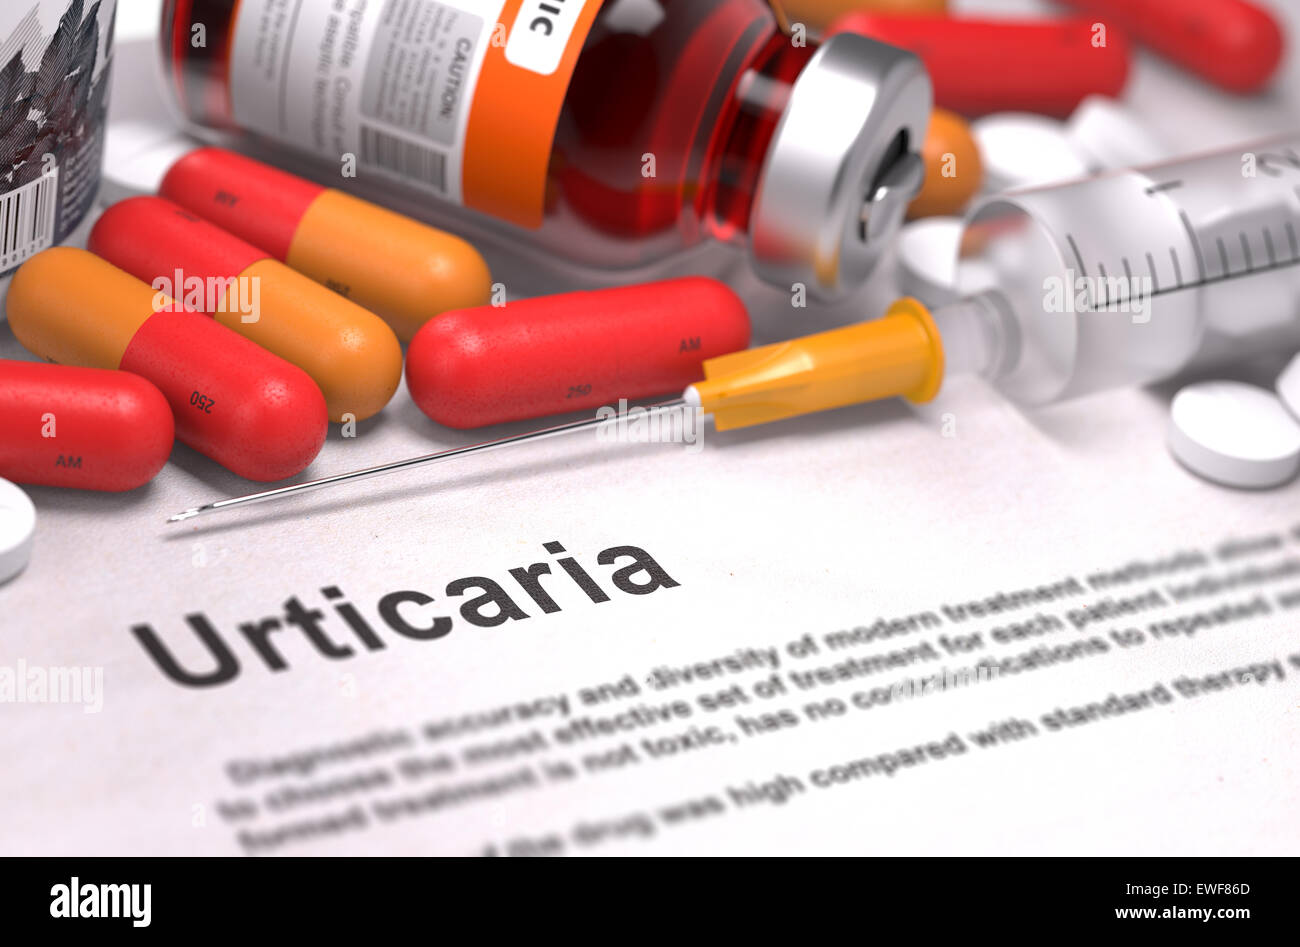 Diagnosis - Urticaria. Medical Concept. 3D Render. Stock Photo